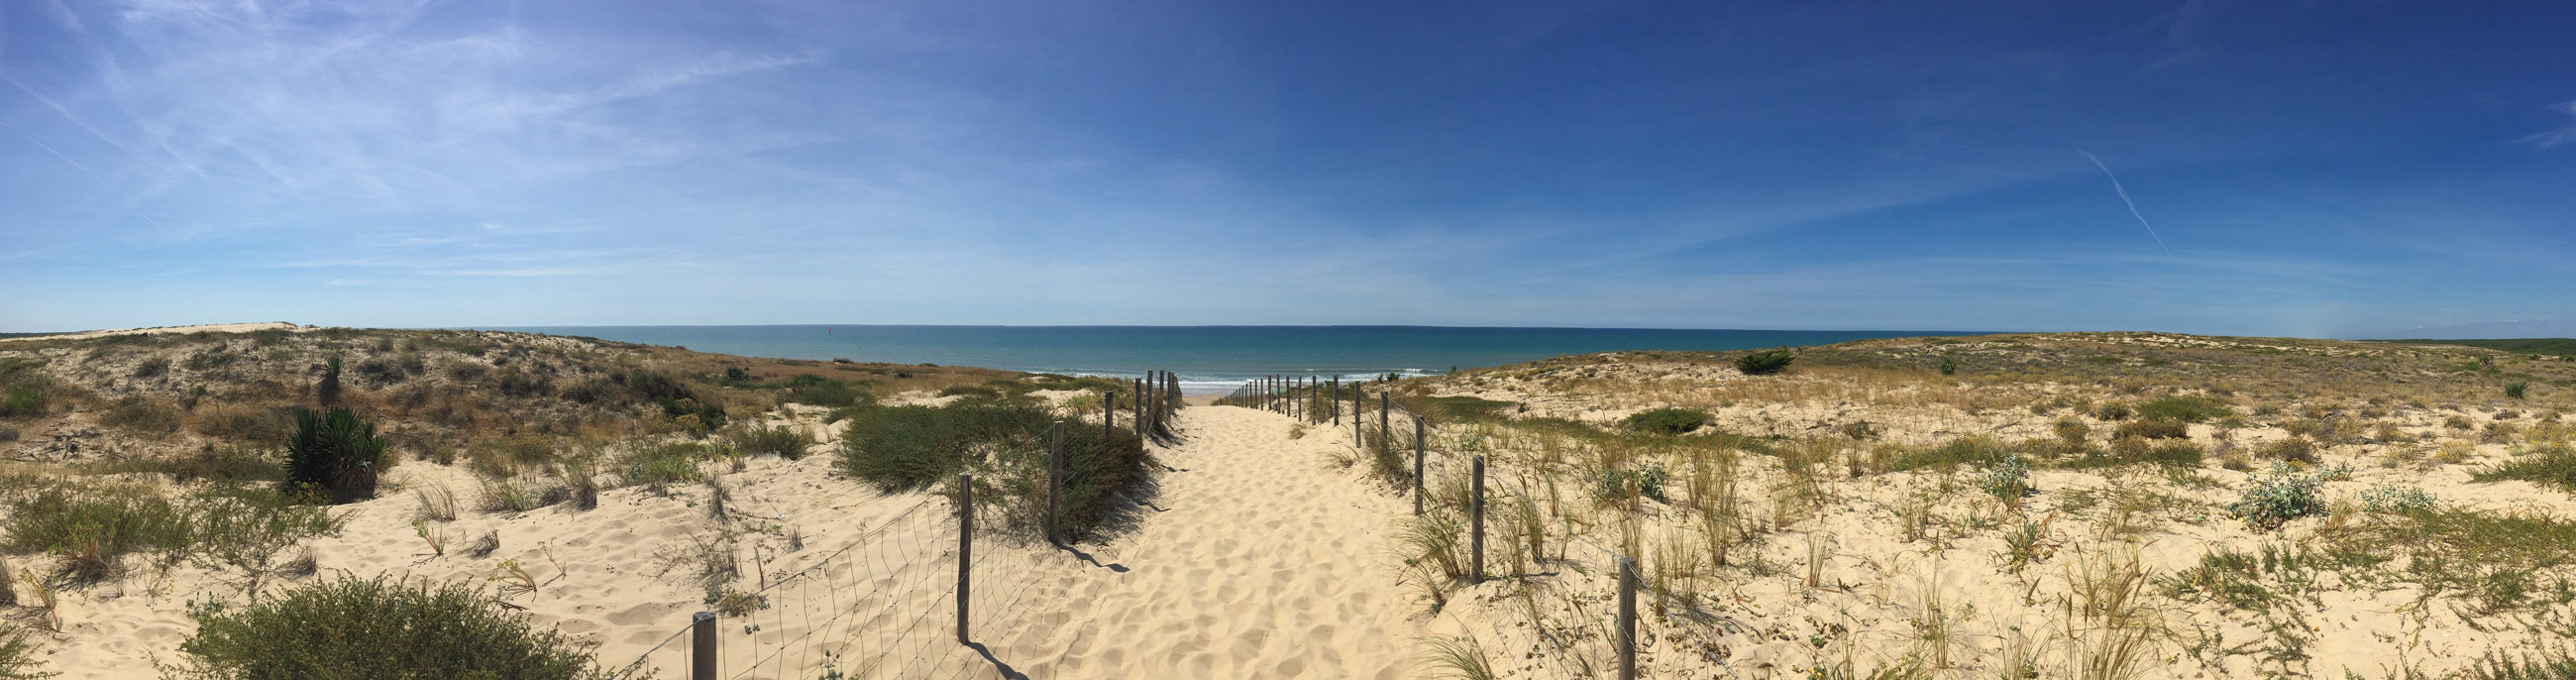 capferret-france-beach-paradise-dune-surf-kite-travel-holiday